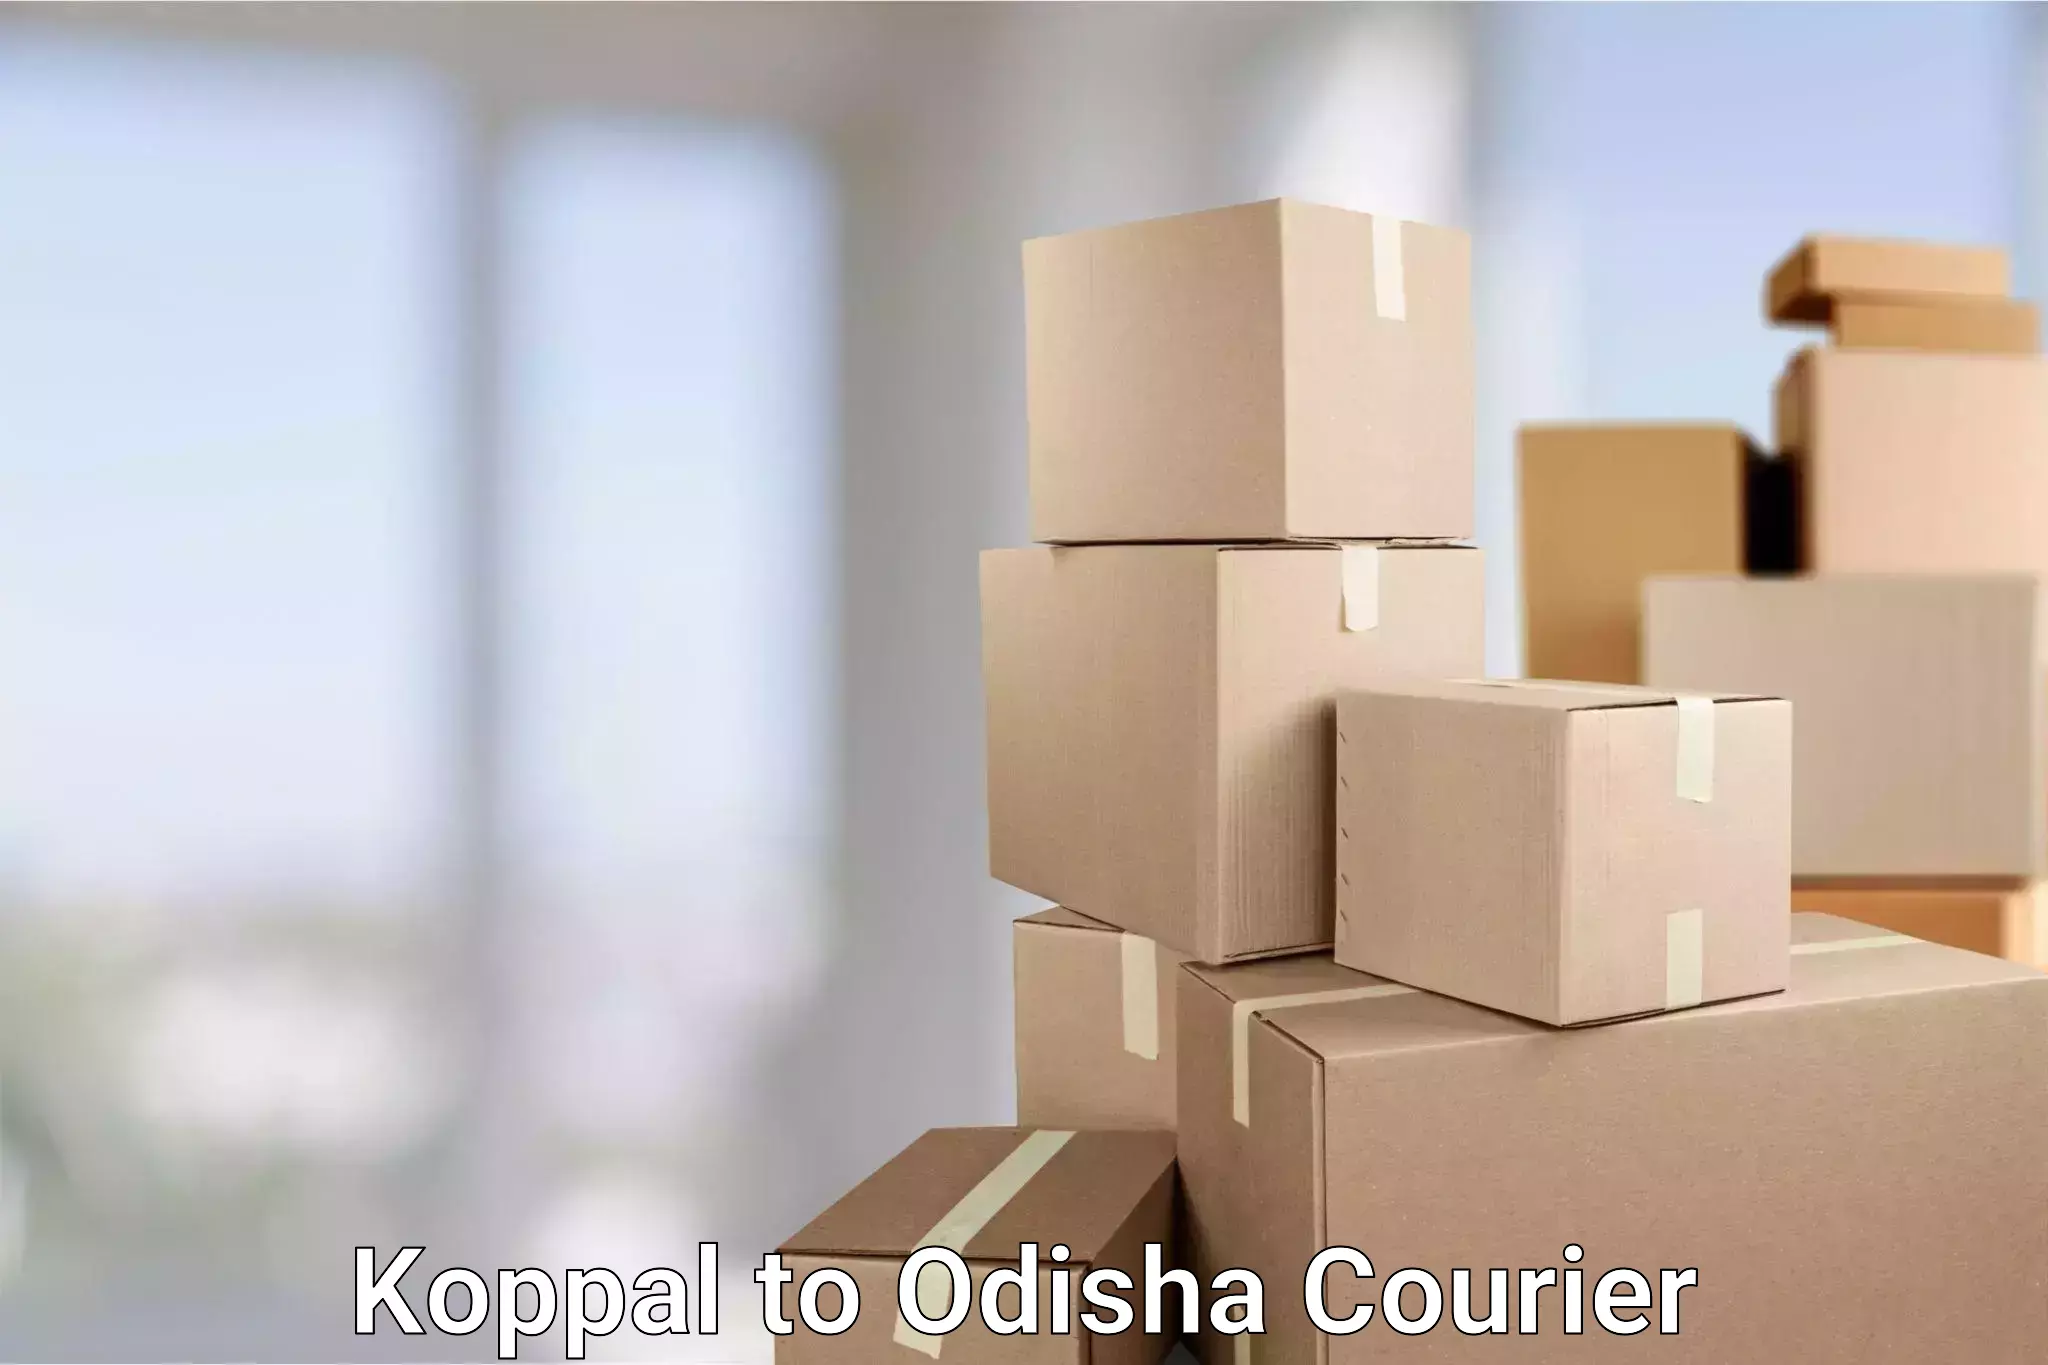 Streamlined logistics management in Koppal to Odisha